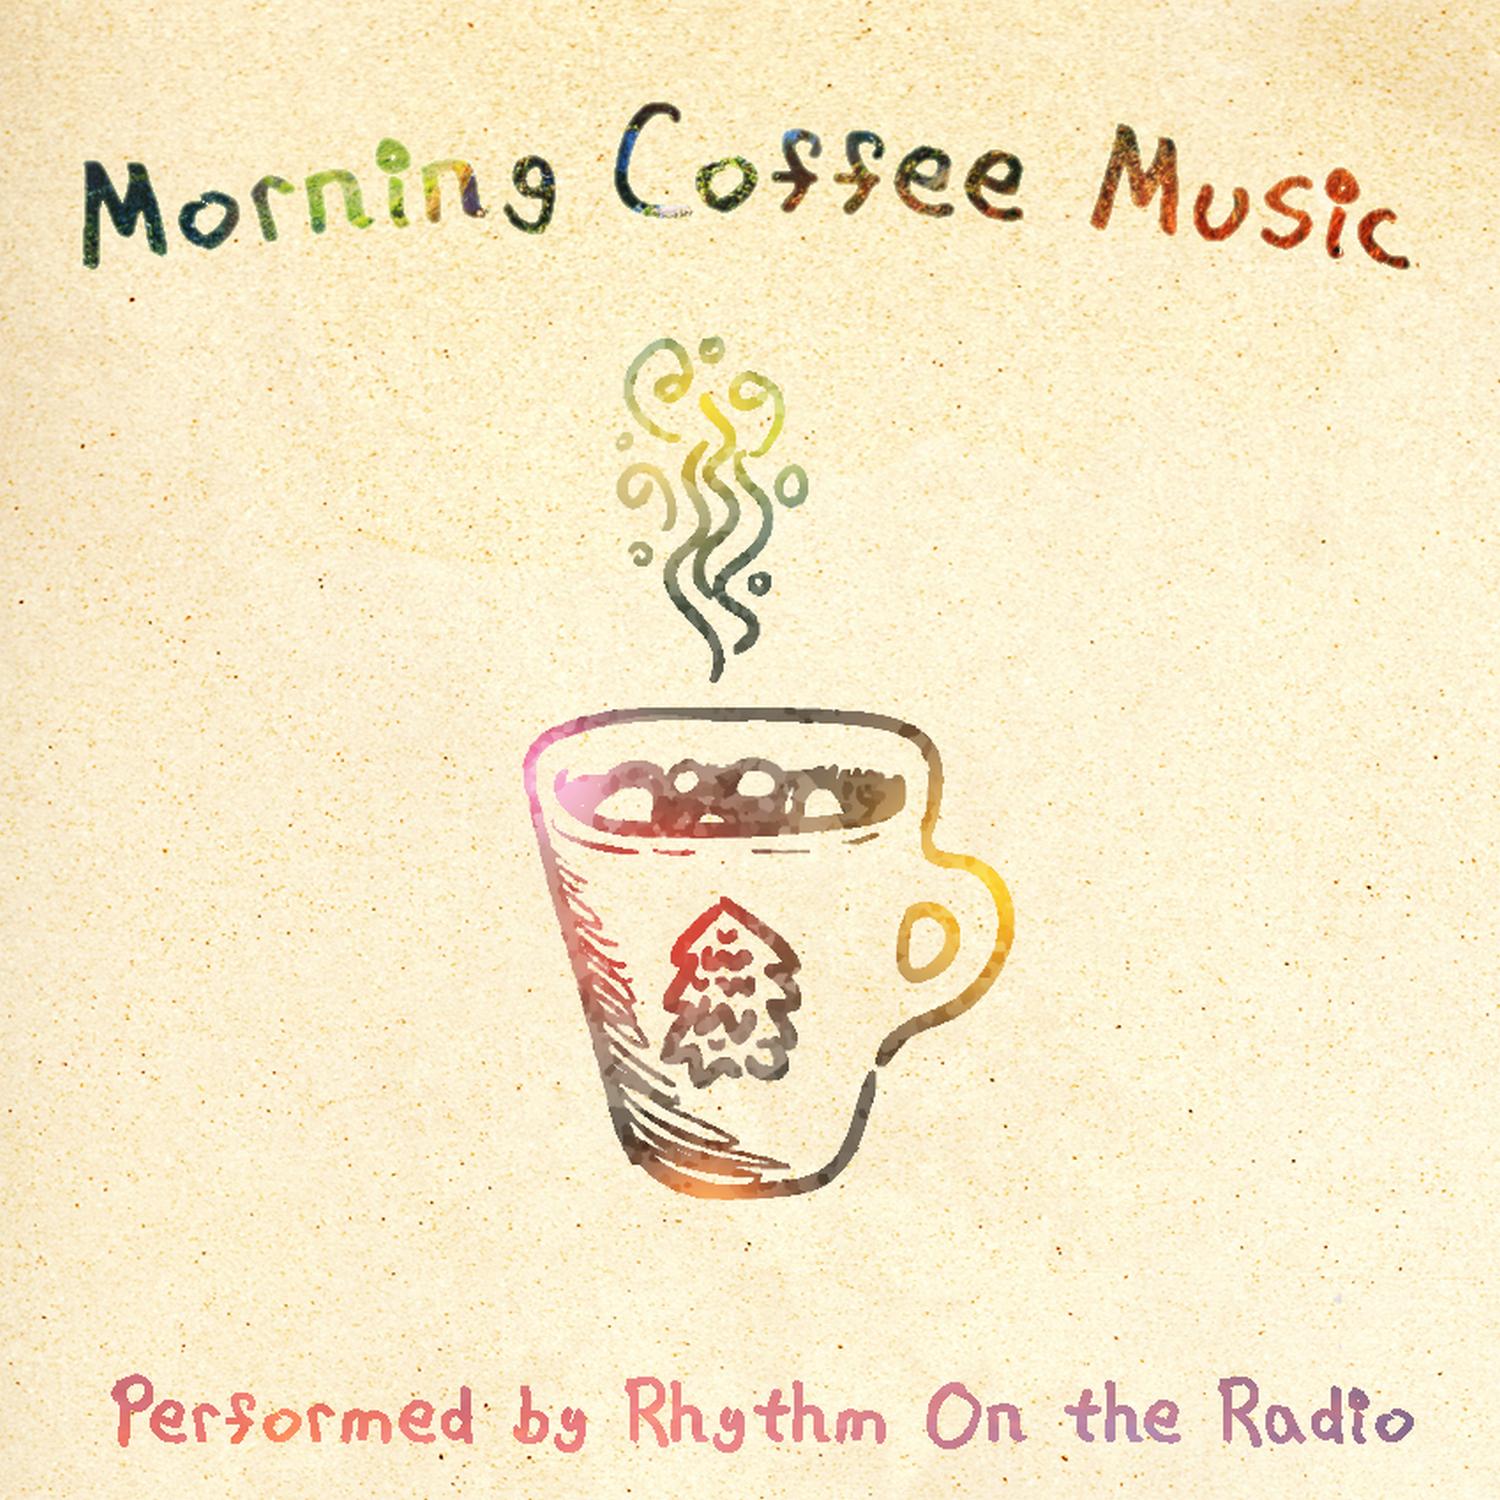 Morning Coffee Music